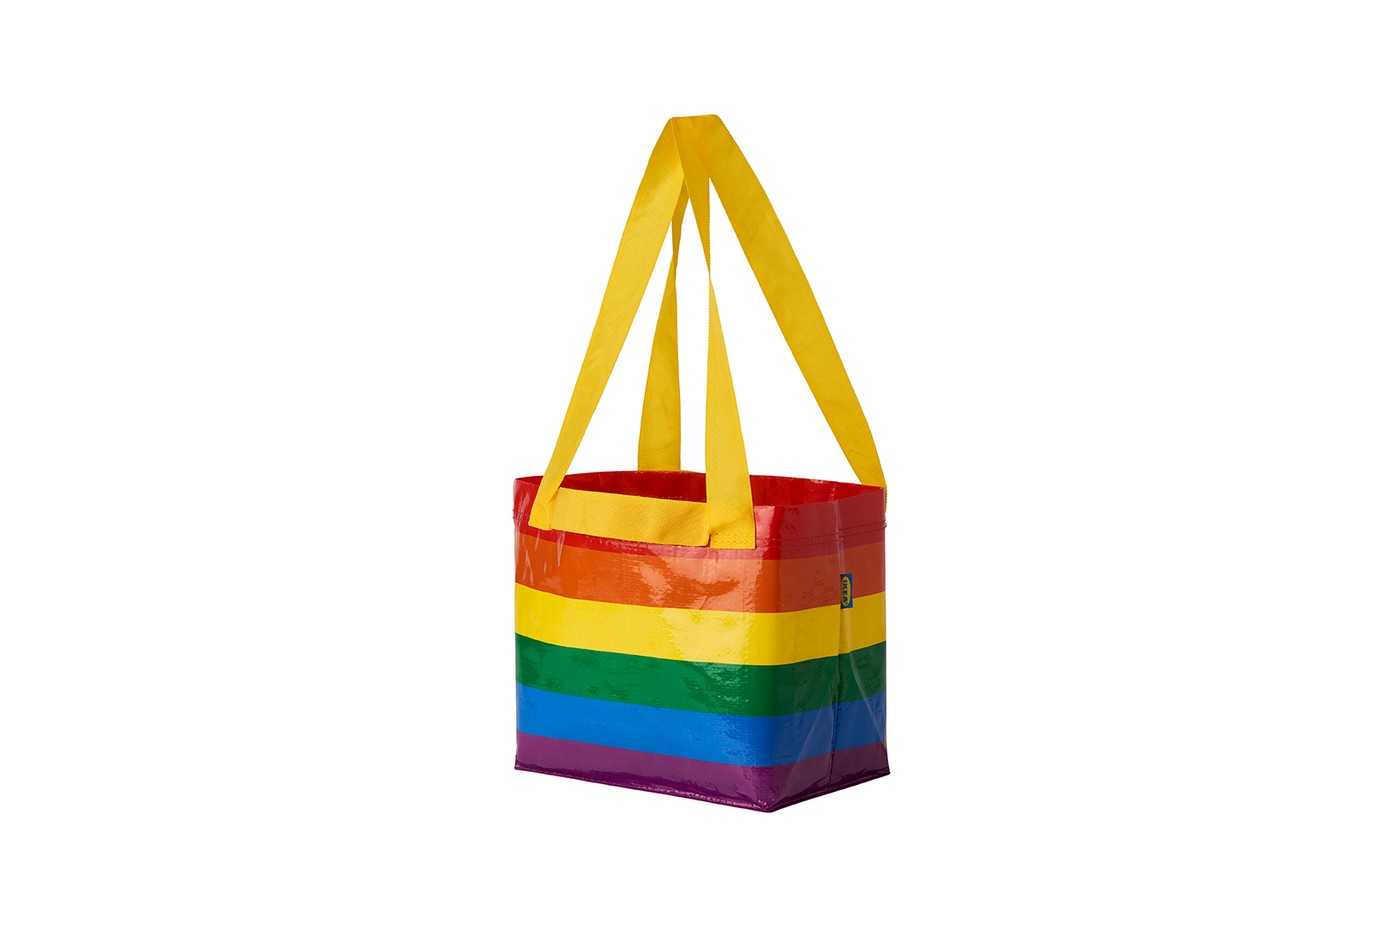 IKEA U.S. launches Pridethemed bags to combat LGBTQ homelessness